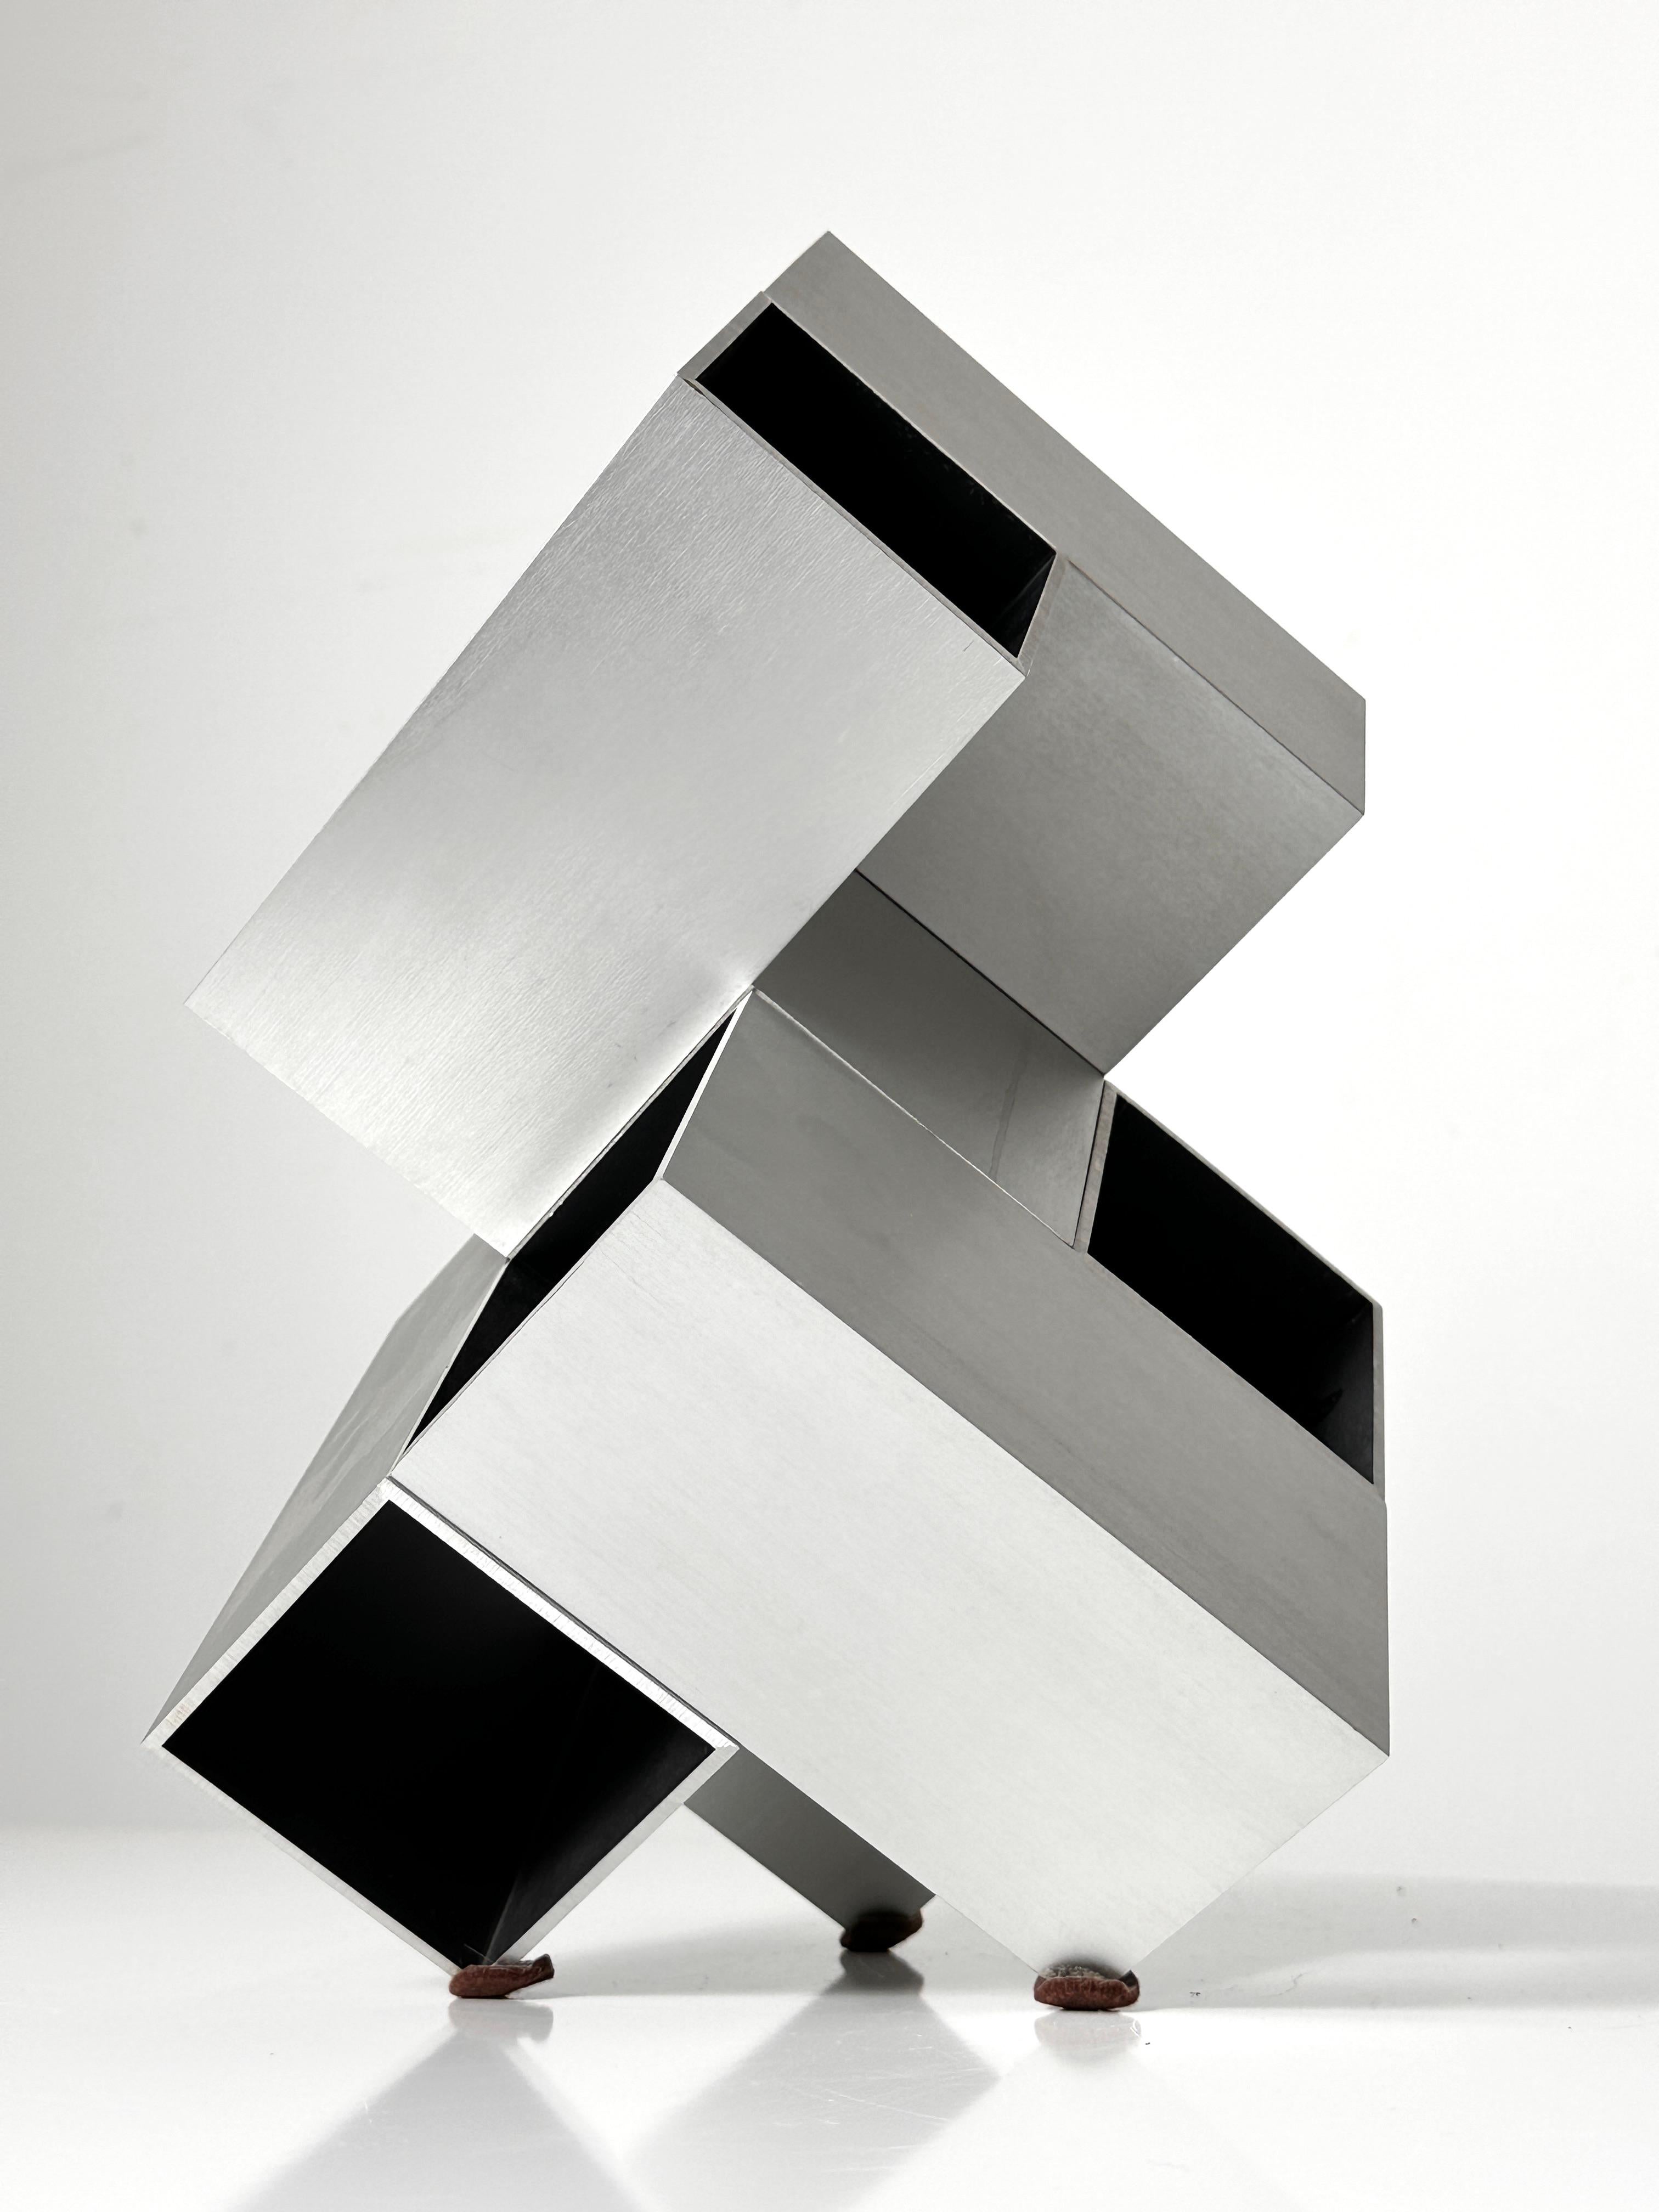 Aluminium Sculpture cubique de Kosso Eloul, artiste israélien 1920-1995 Toronto, Canada 